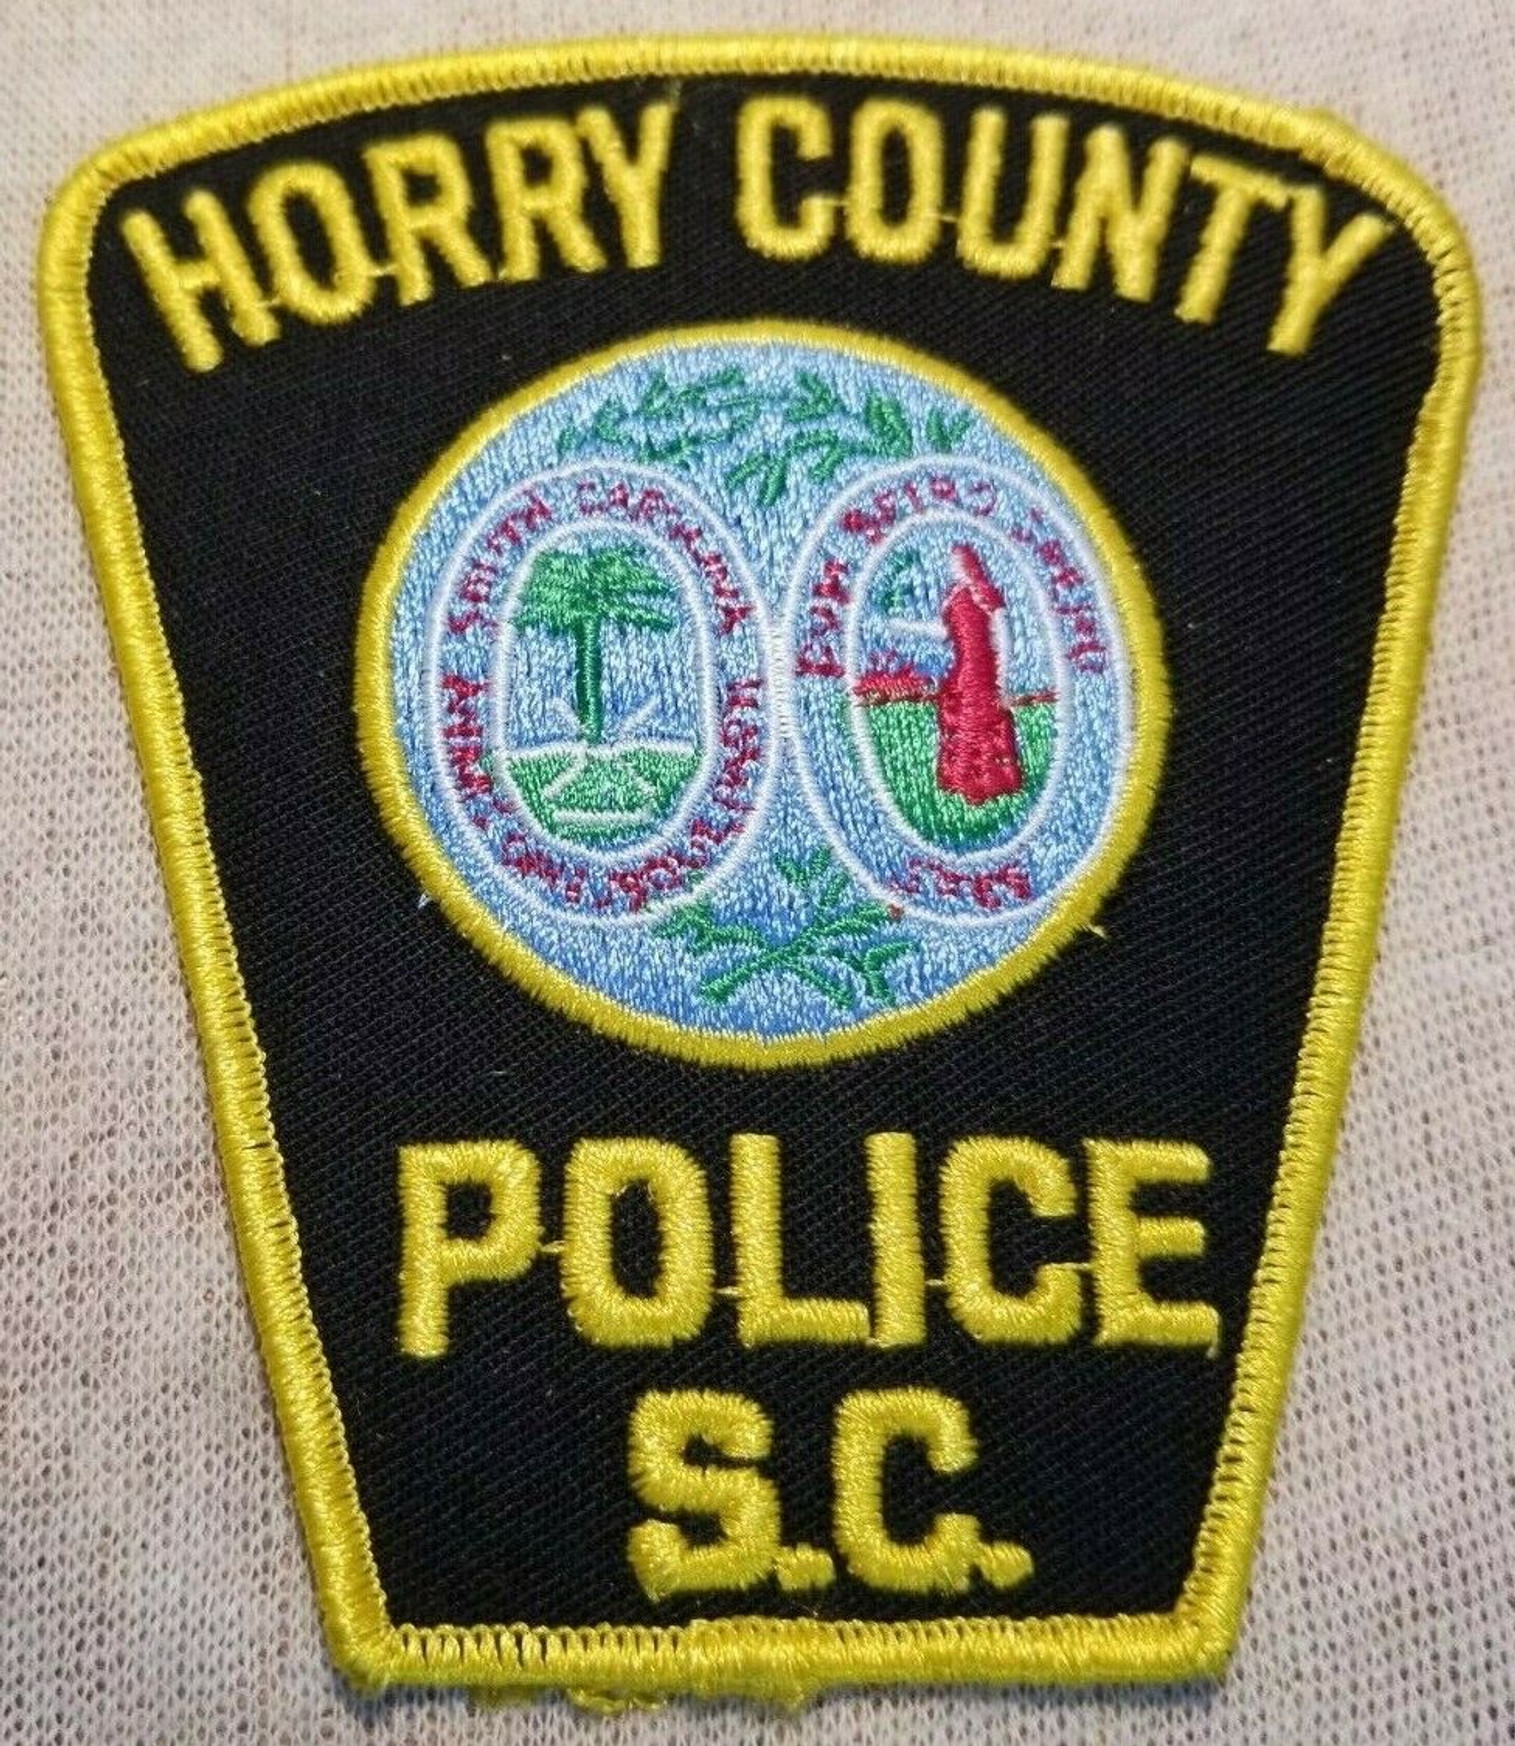 Horry County South Carolina Police Patch